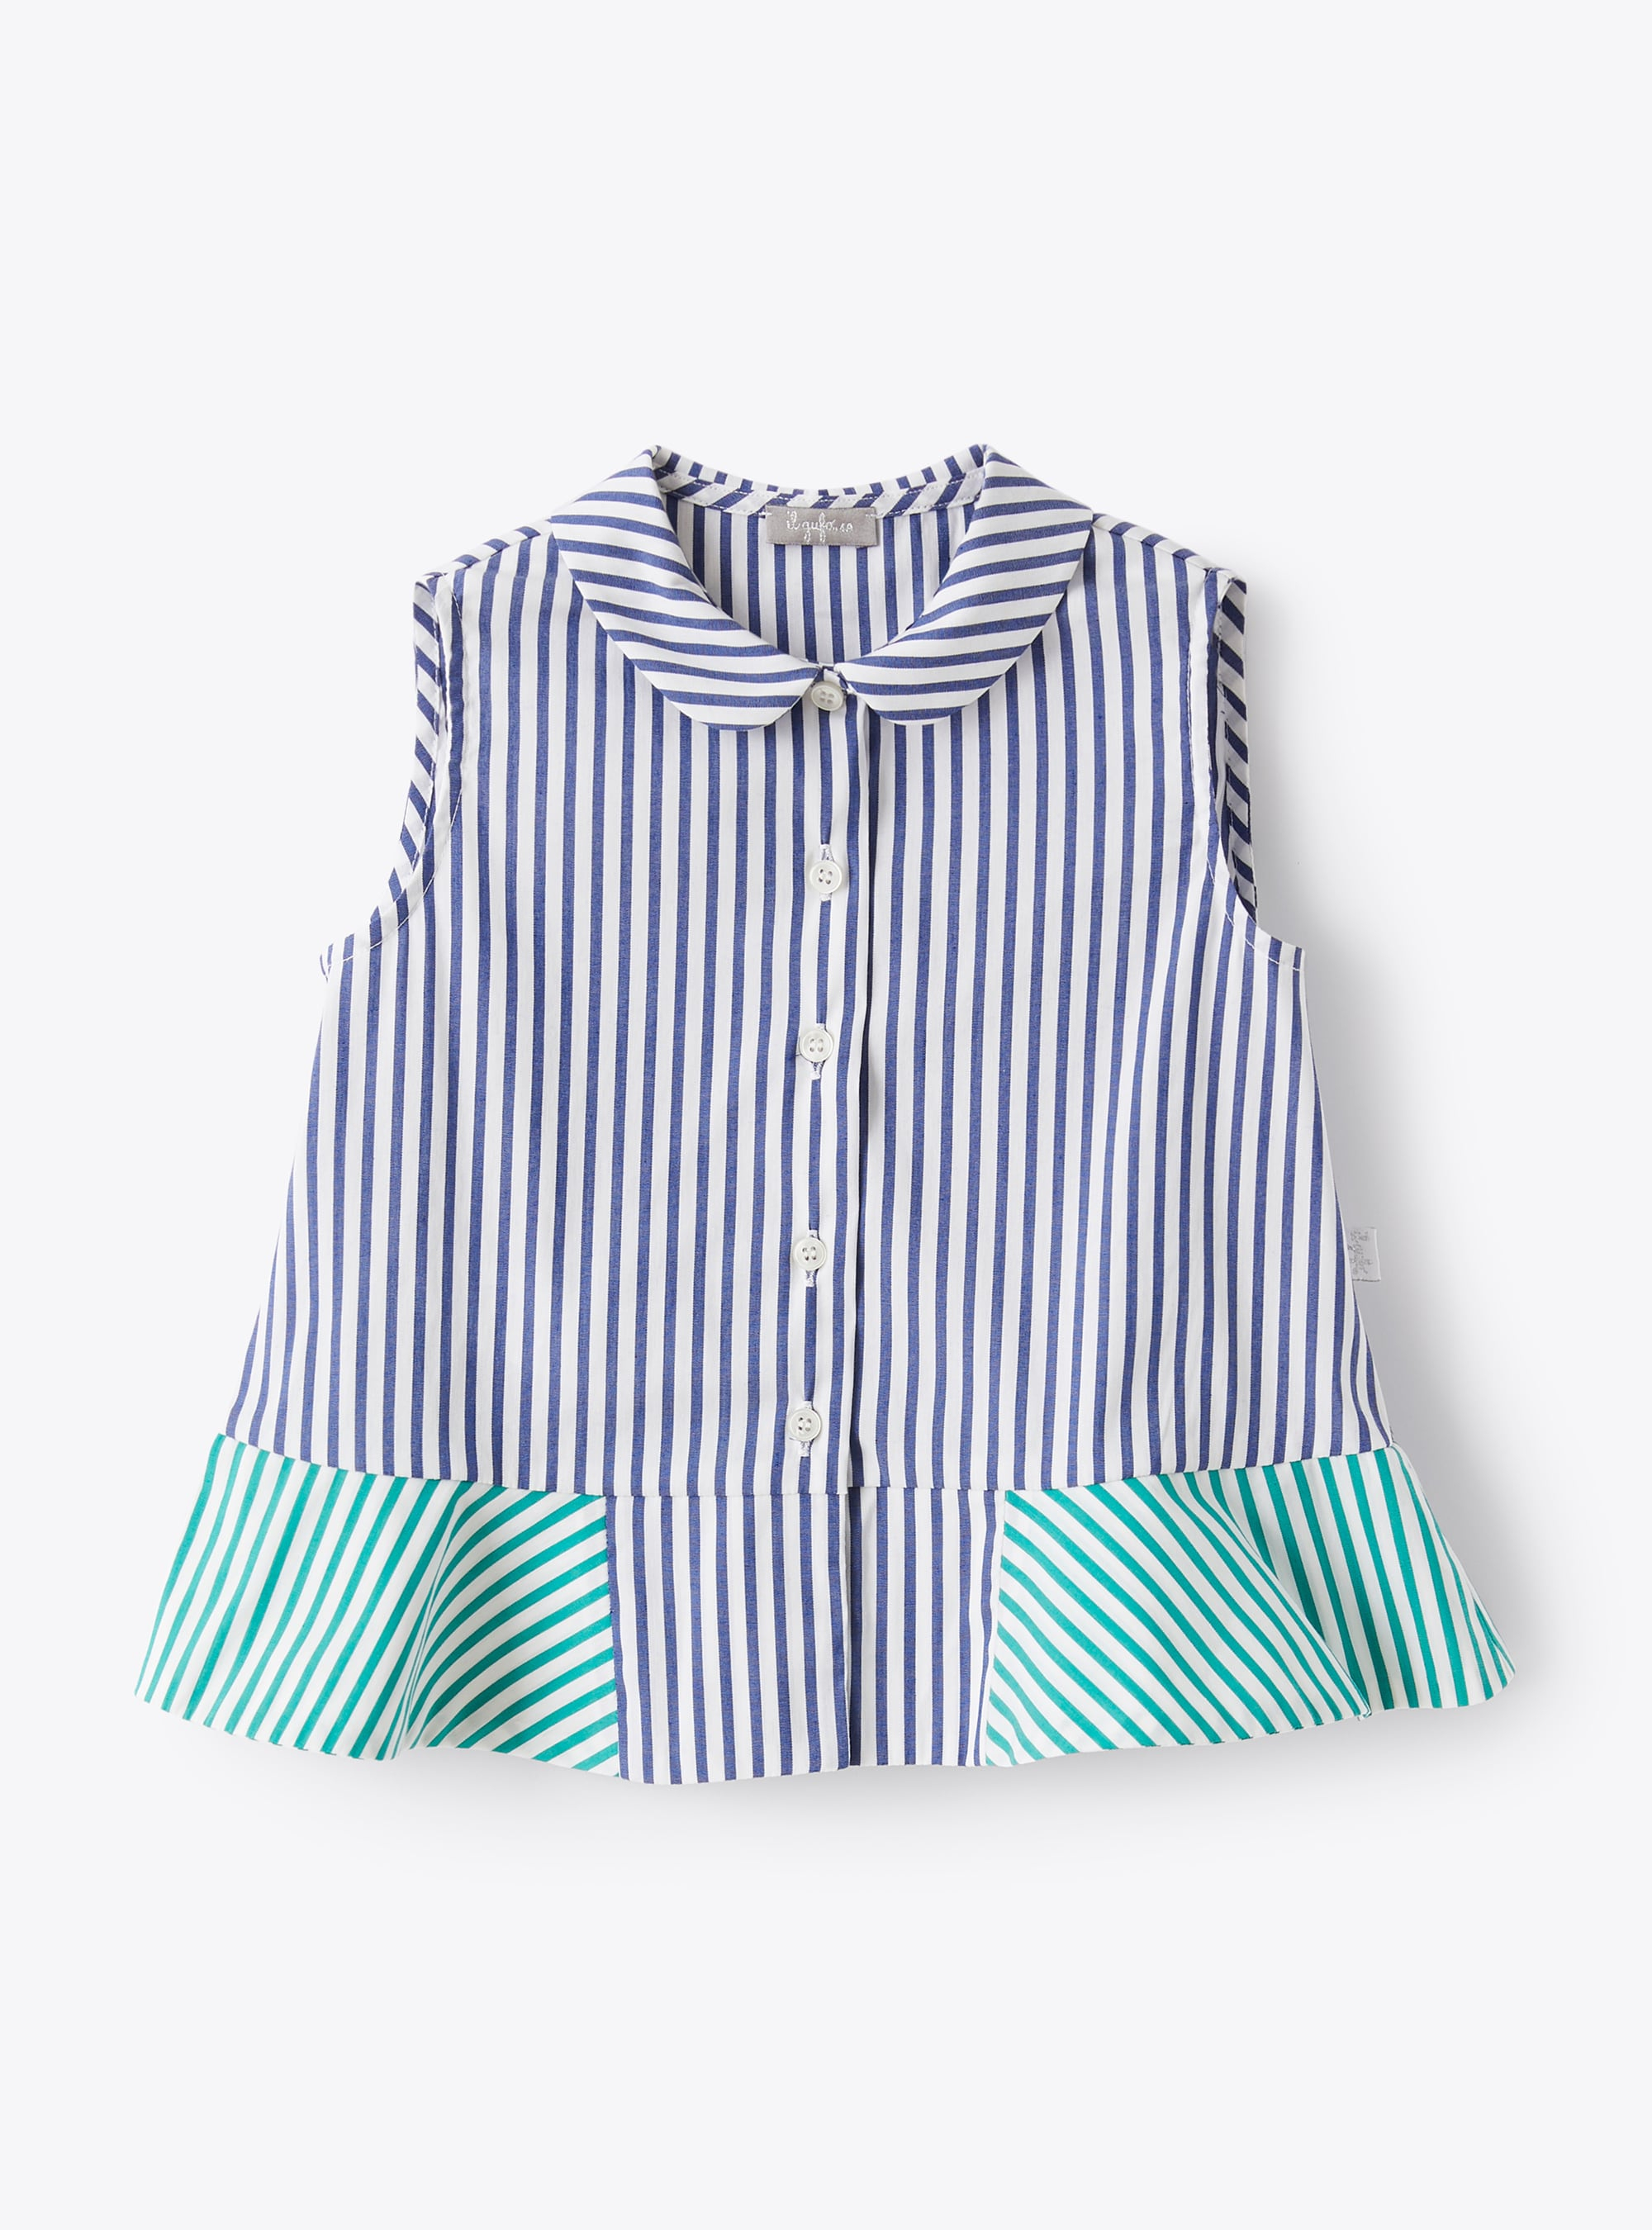 Sleeveless shirt in two-tone stripes - Shirts - Il Gufo